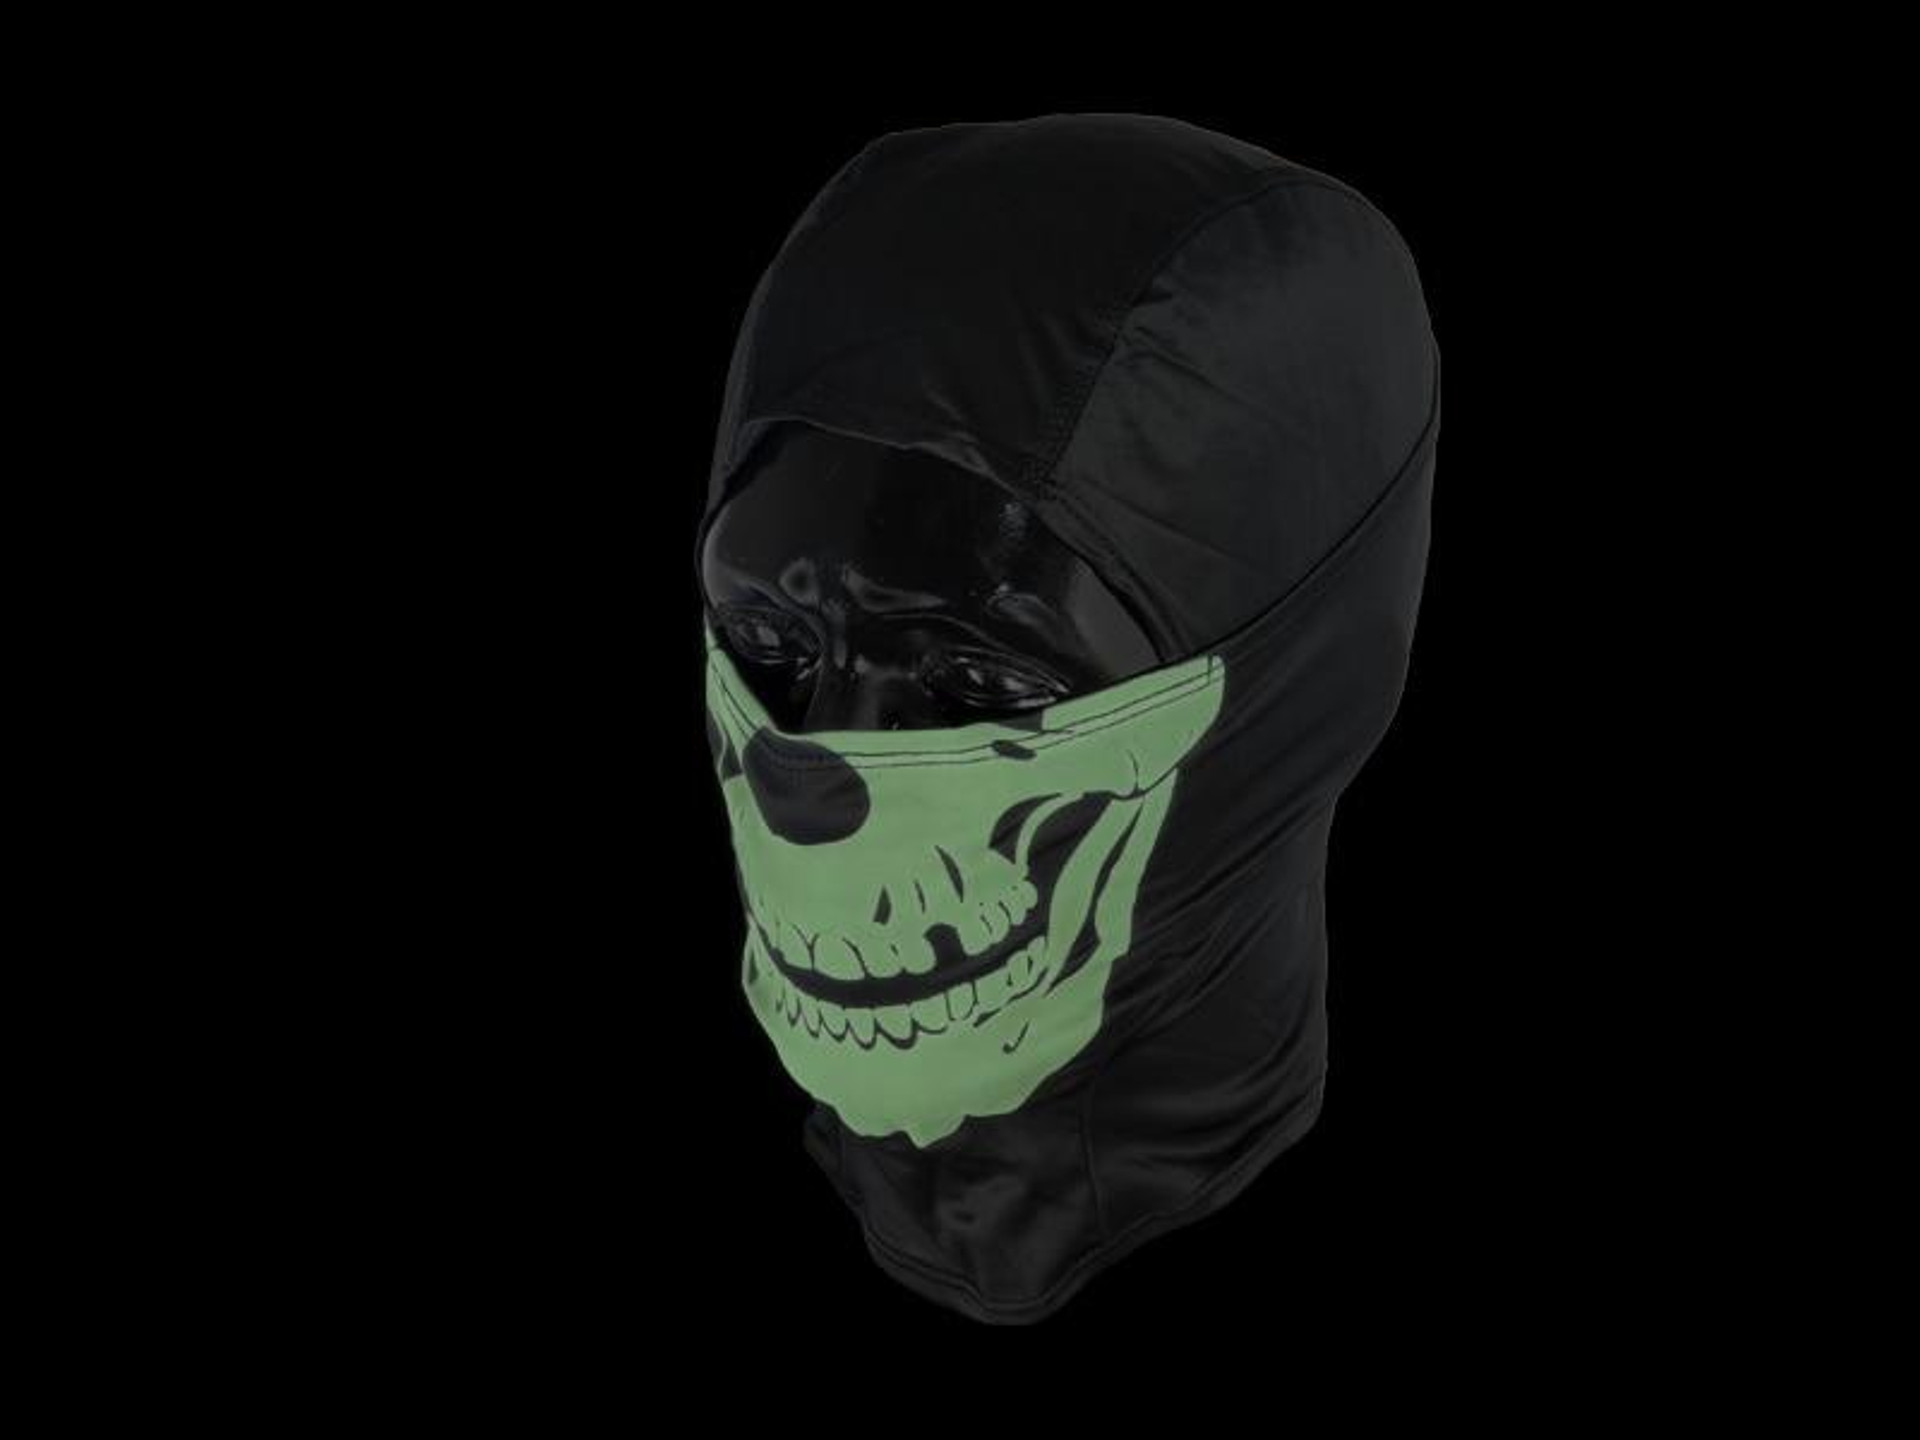 Lancer Tactical Ghost Balaclava, Black w/ Glow in the Dark Skull Design